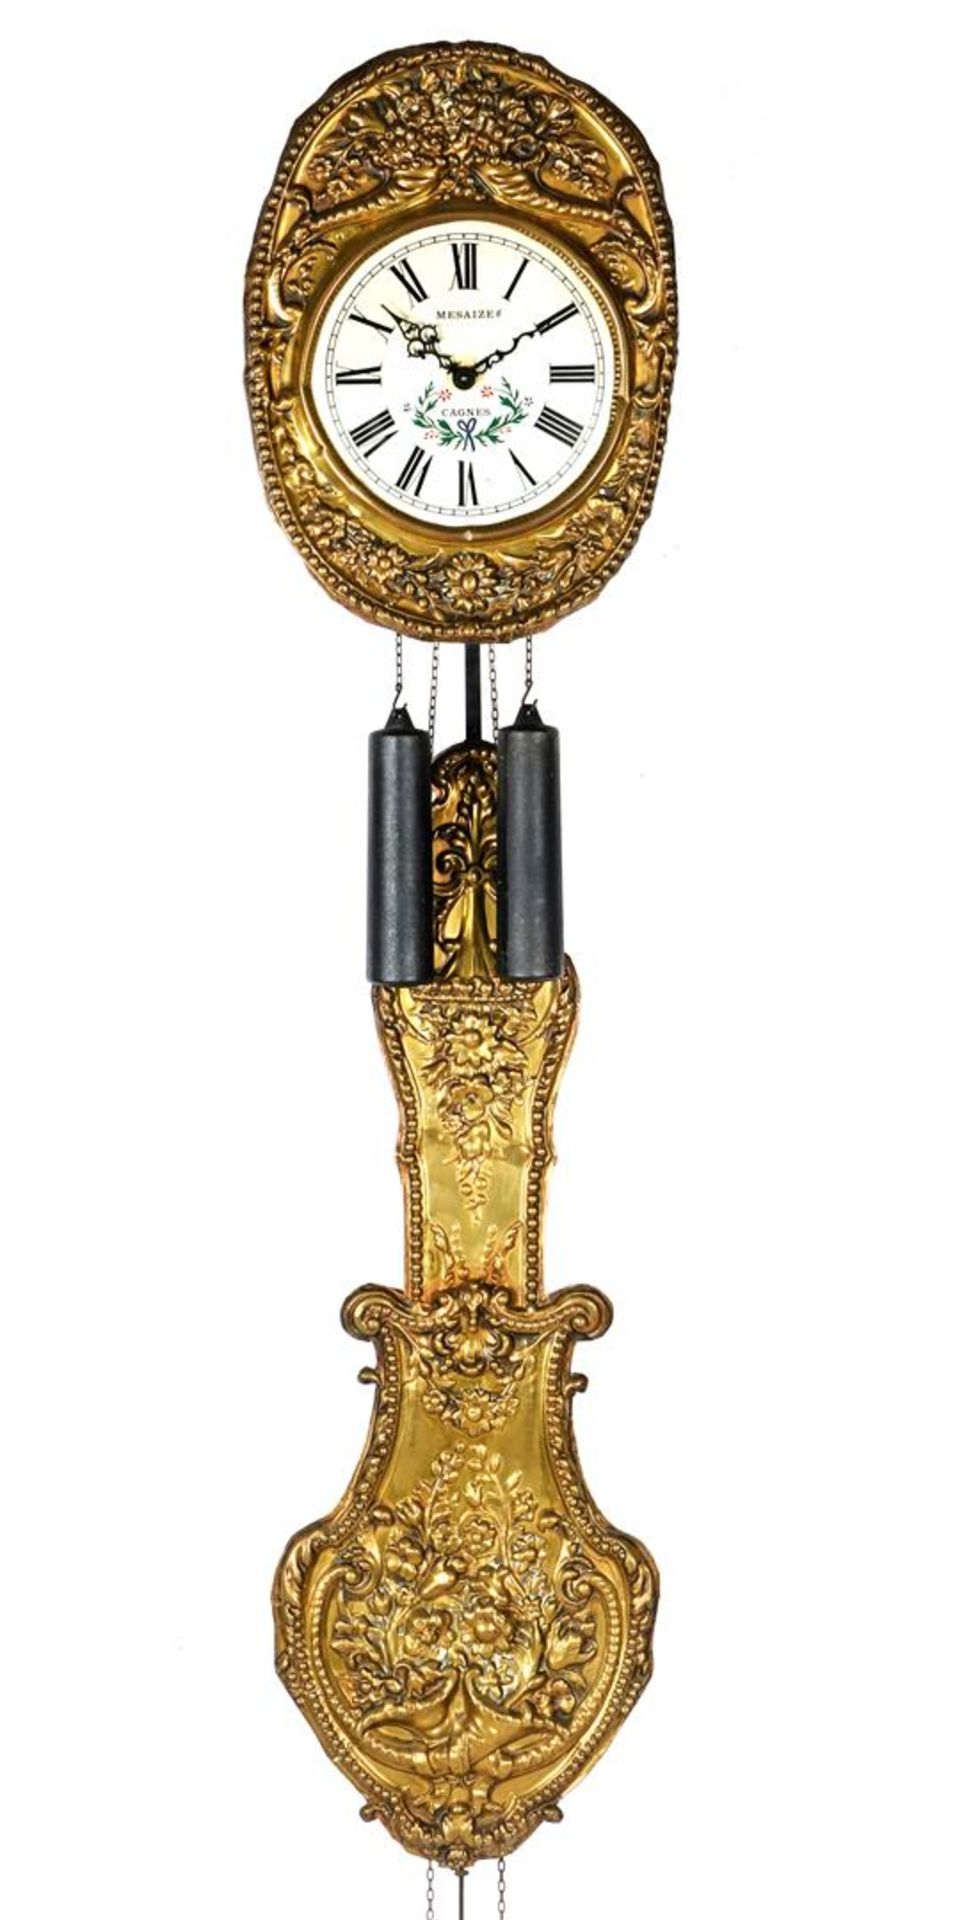 After antique model Comtoise clock